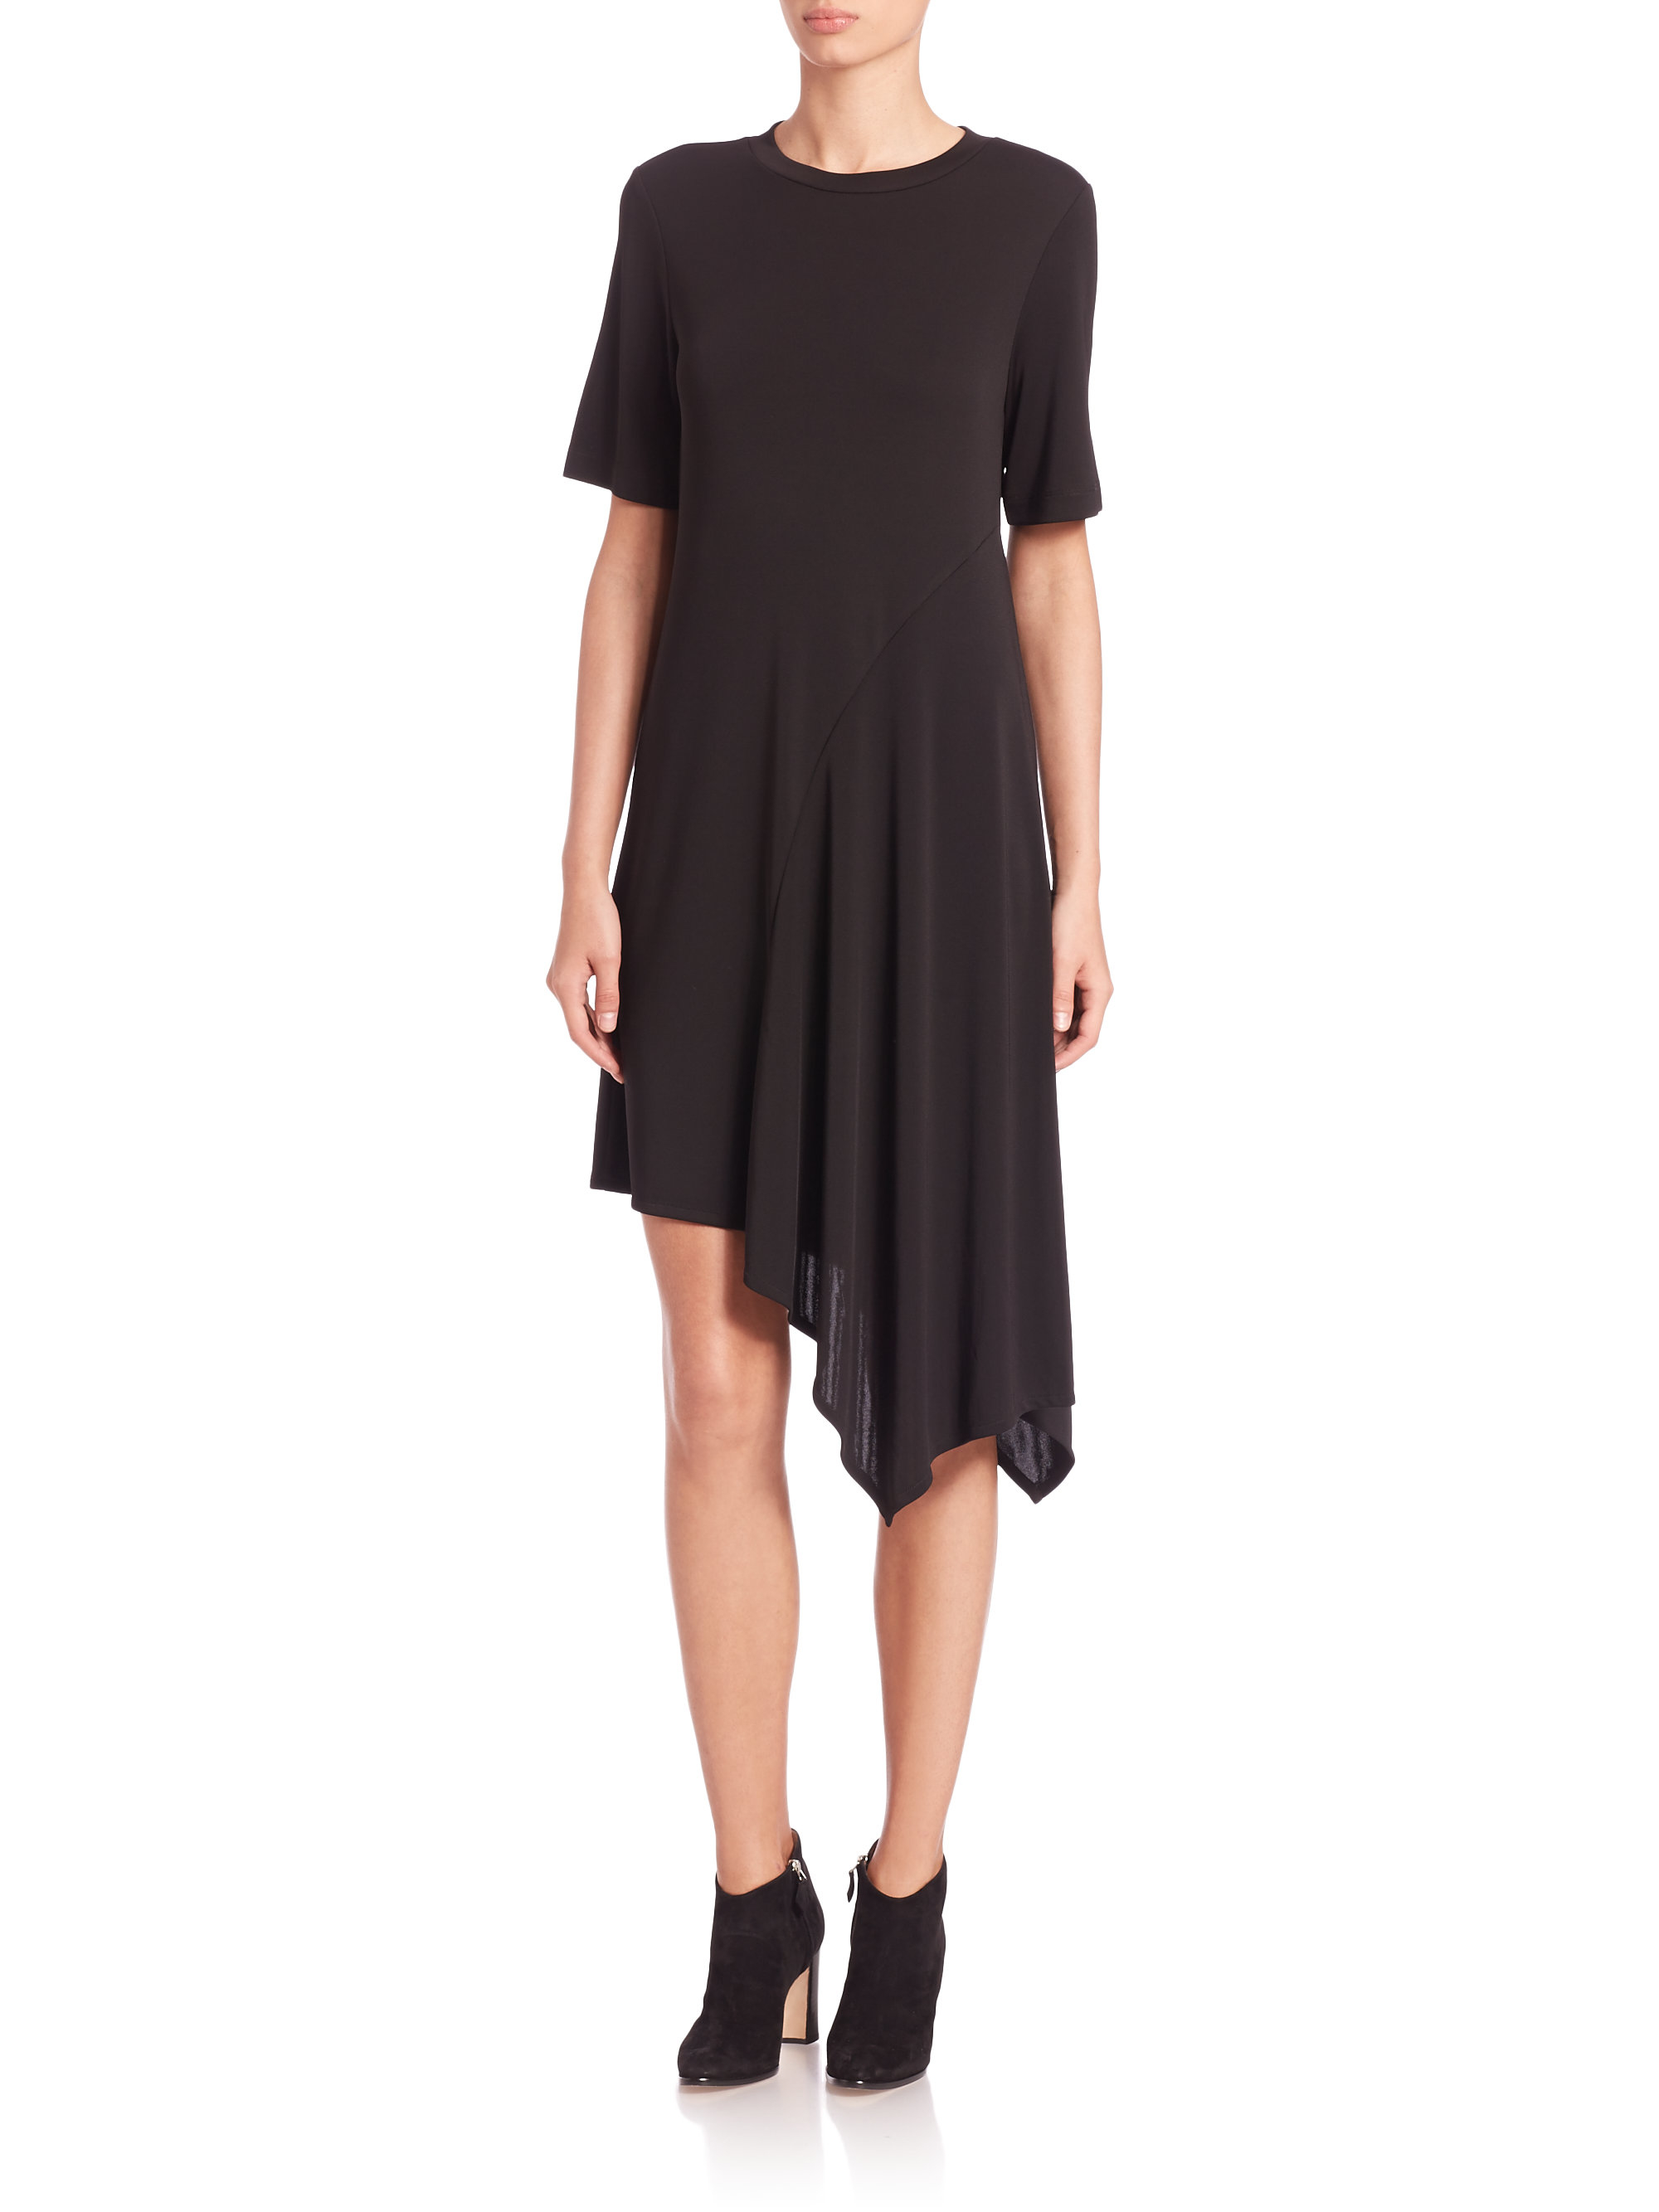 Dkny Stretch Jersey Asymmetrical Dress in Black | Lyst